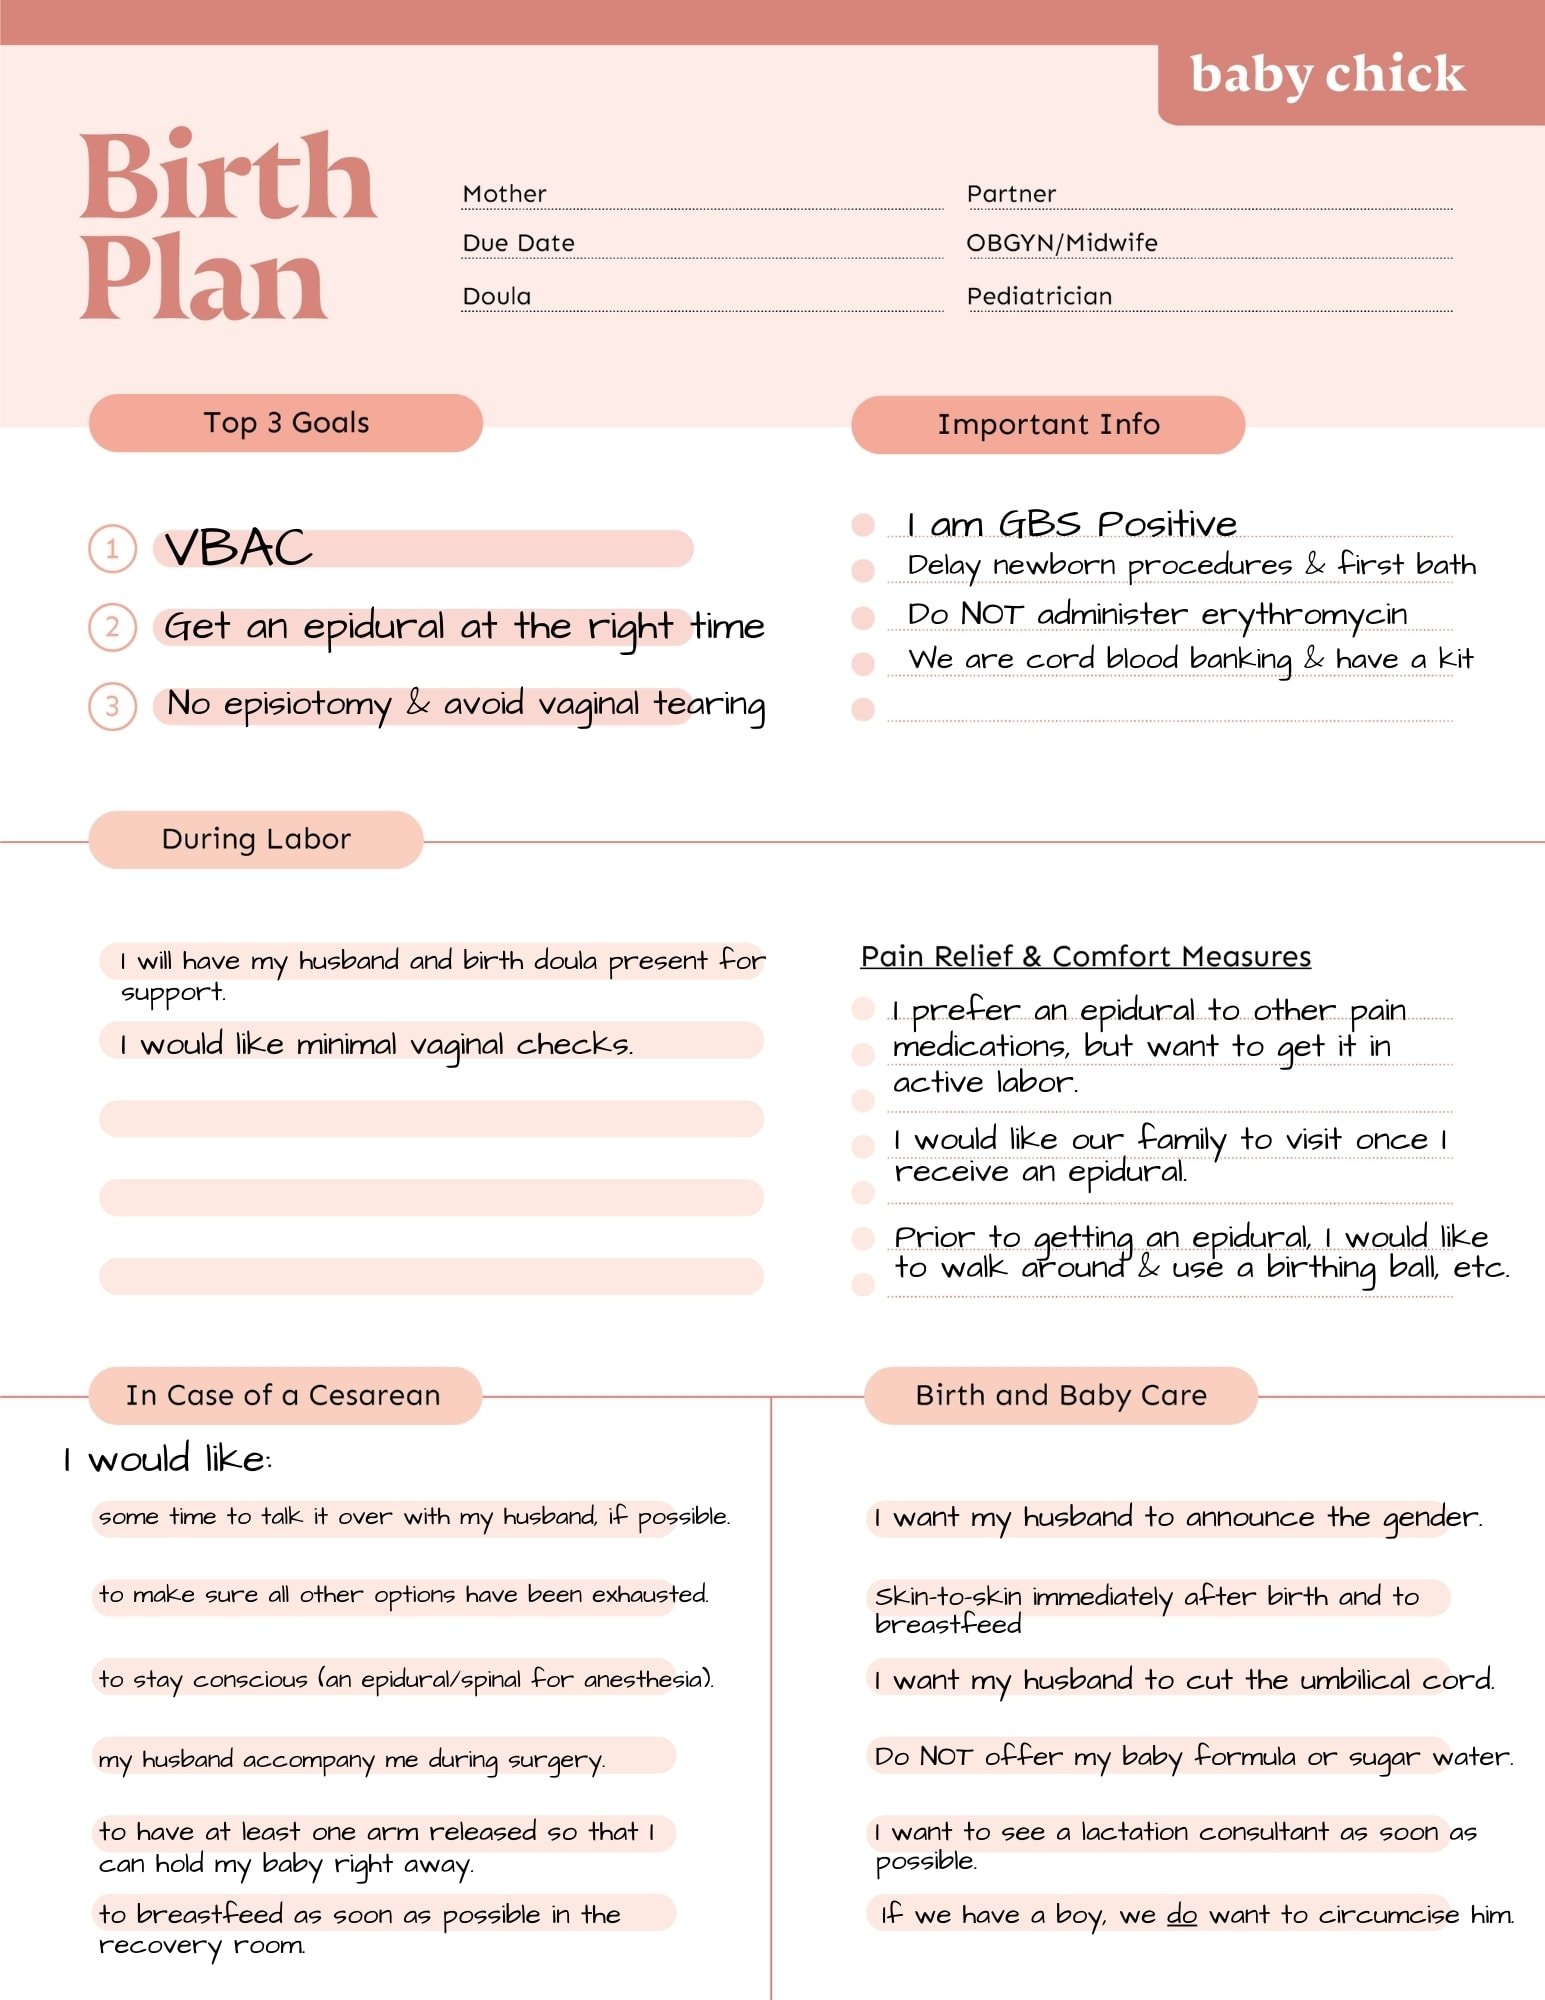 Birth plan example VBAC With Epidural